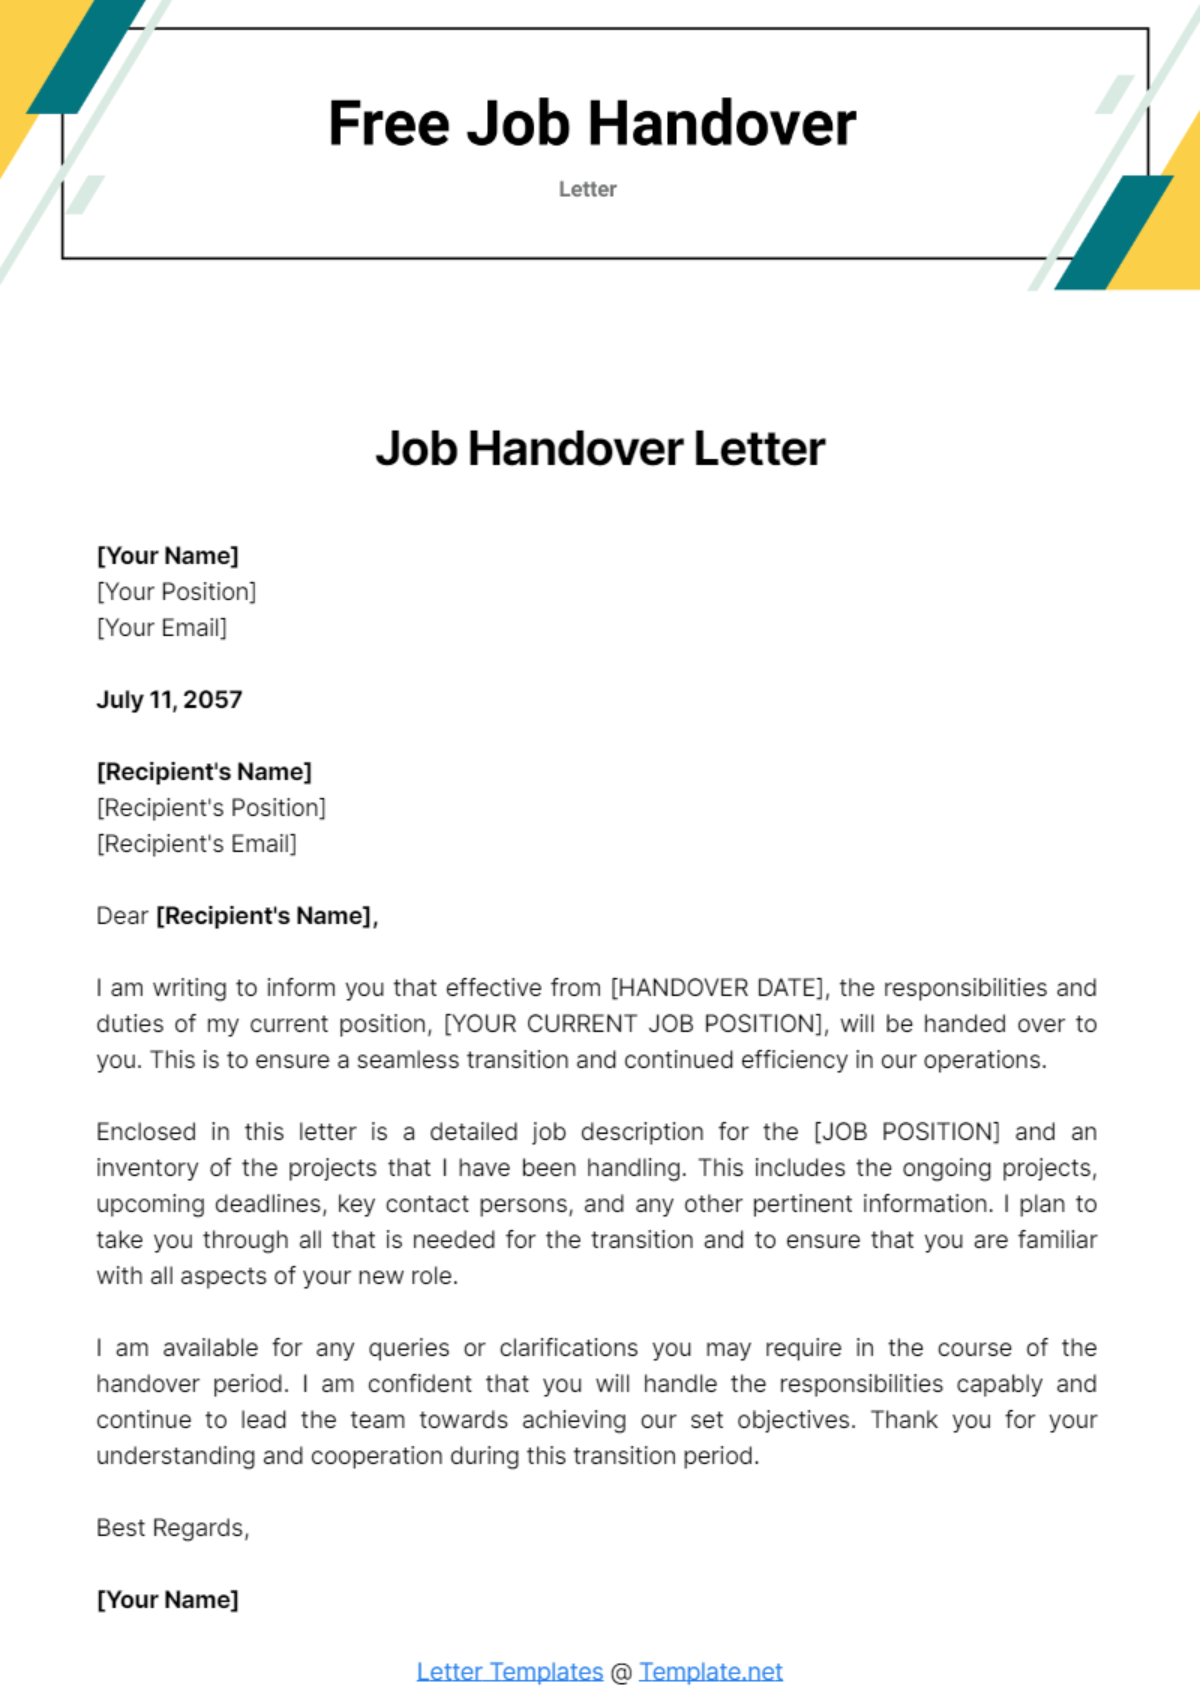 Job Handover Letter Template